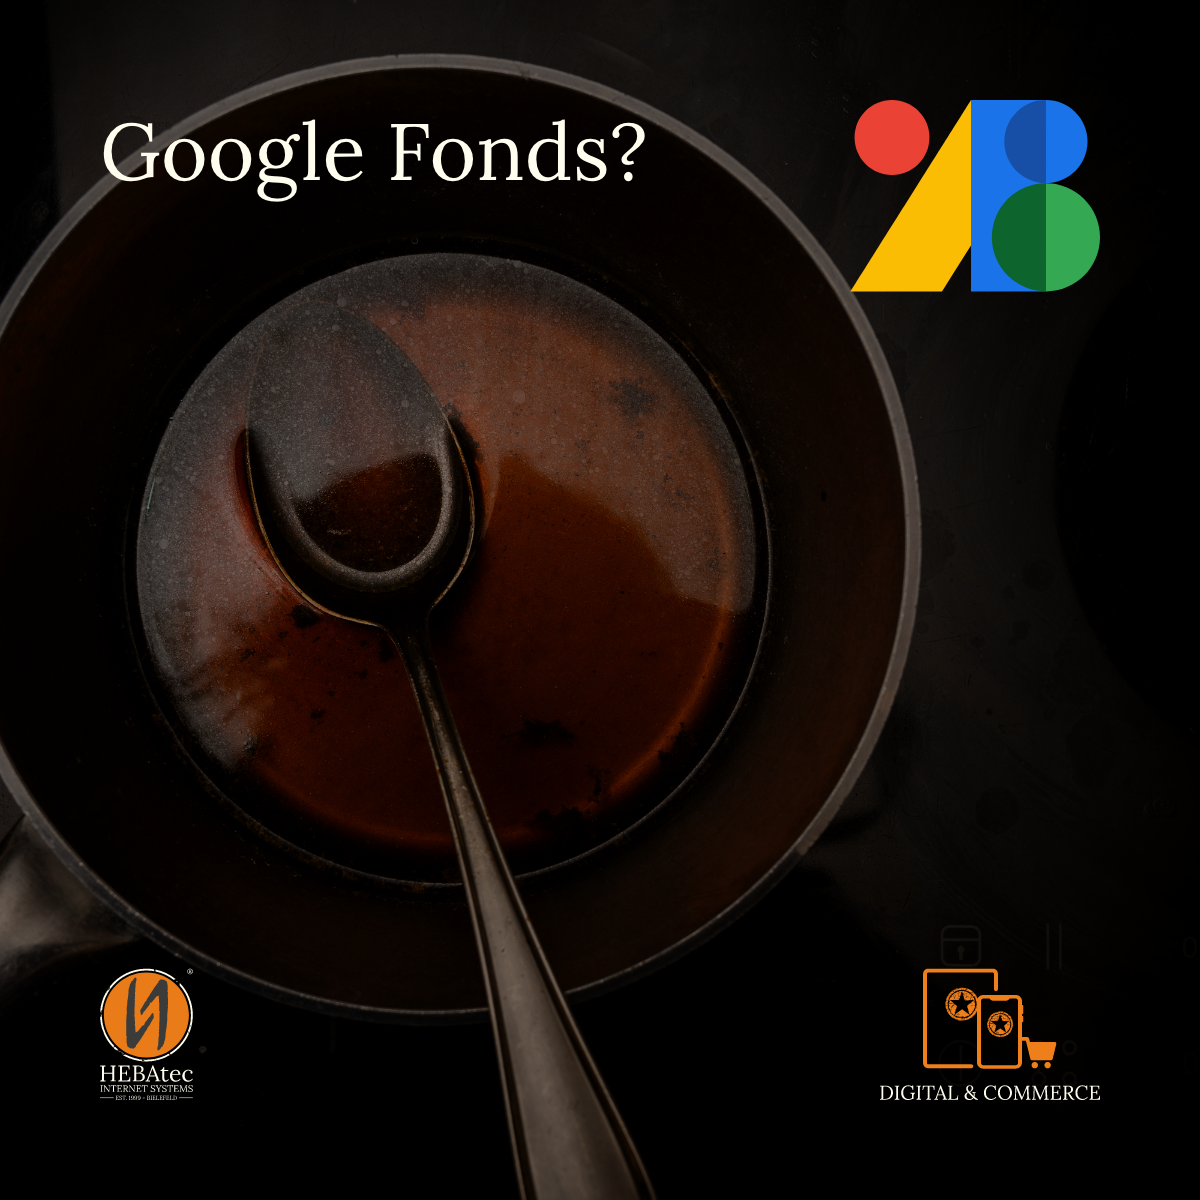 Google Fonds